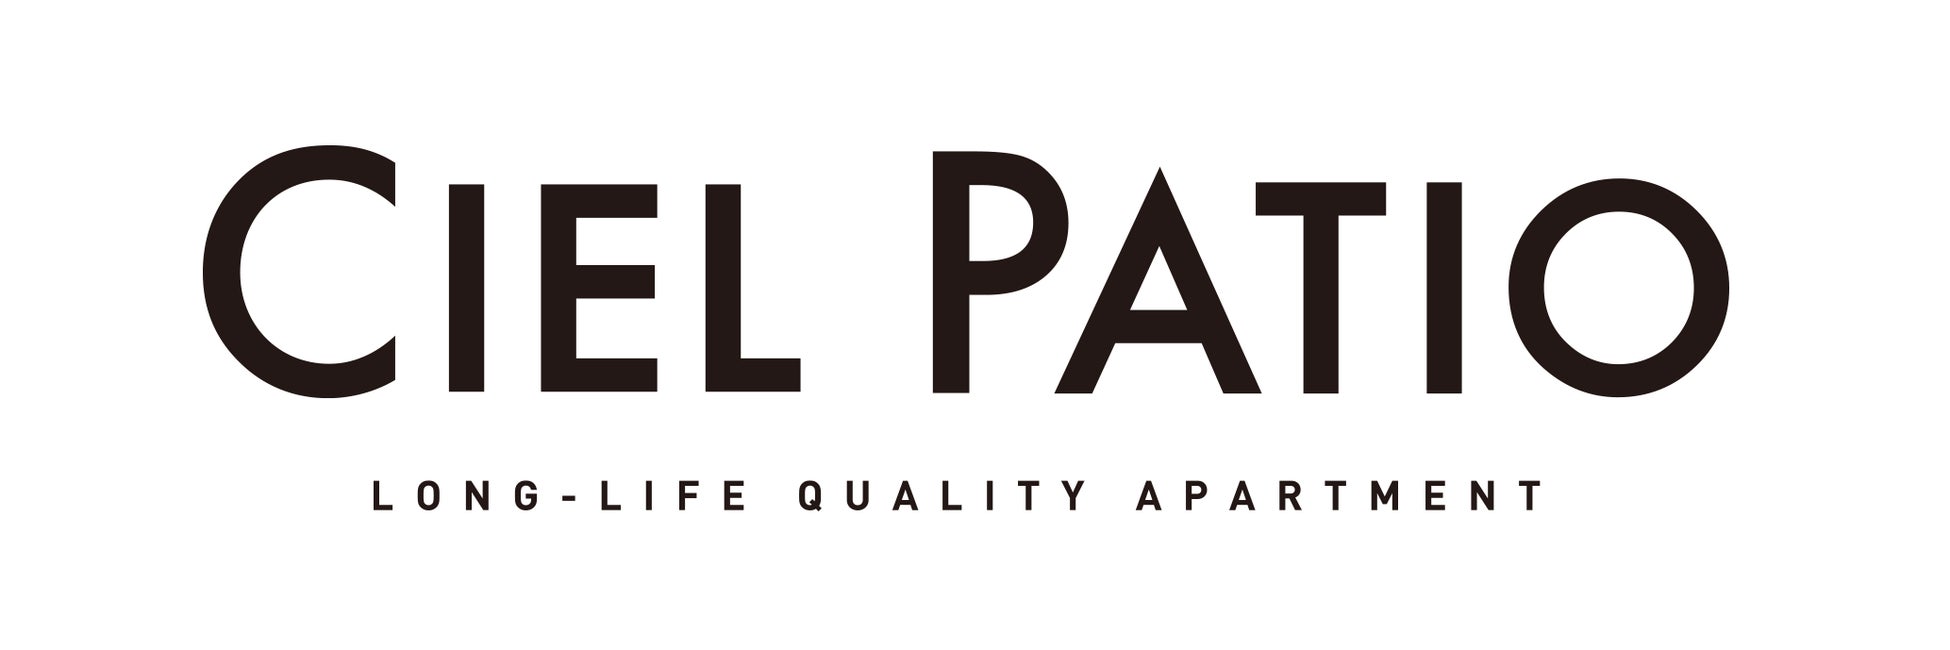 【新商品】当社初の長期優良住宅新商品「CIEL PATIO」販売開始のサブ画像11